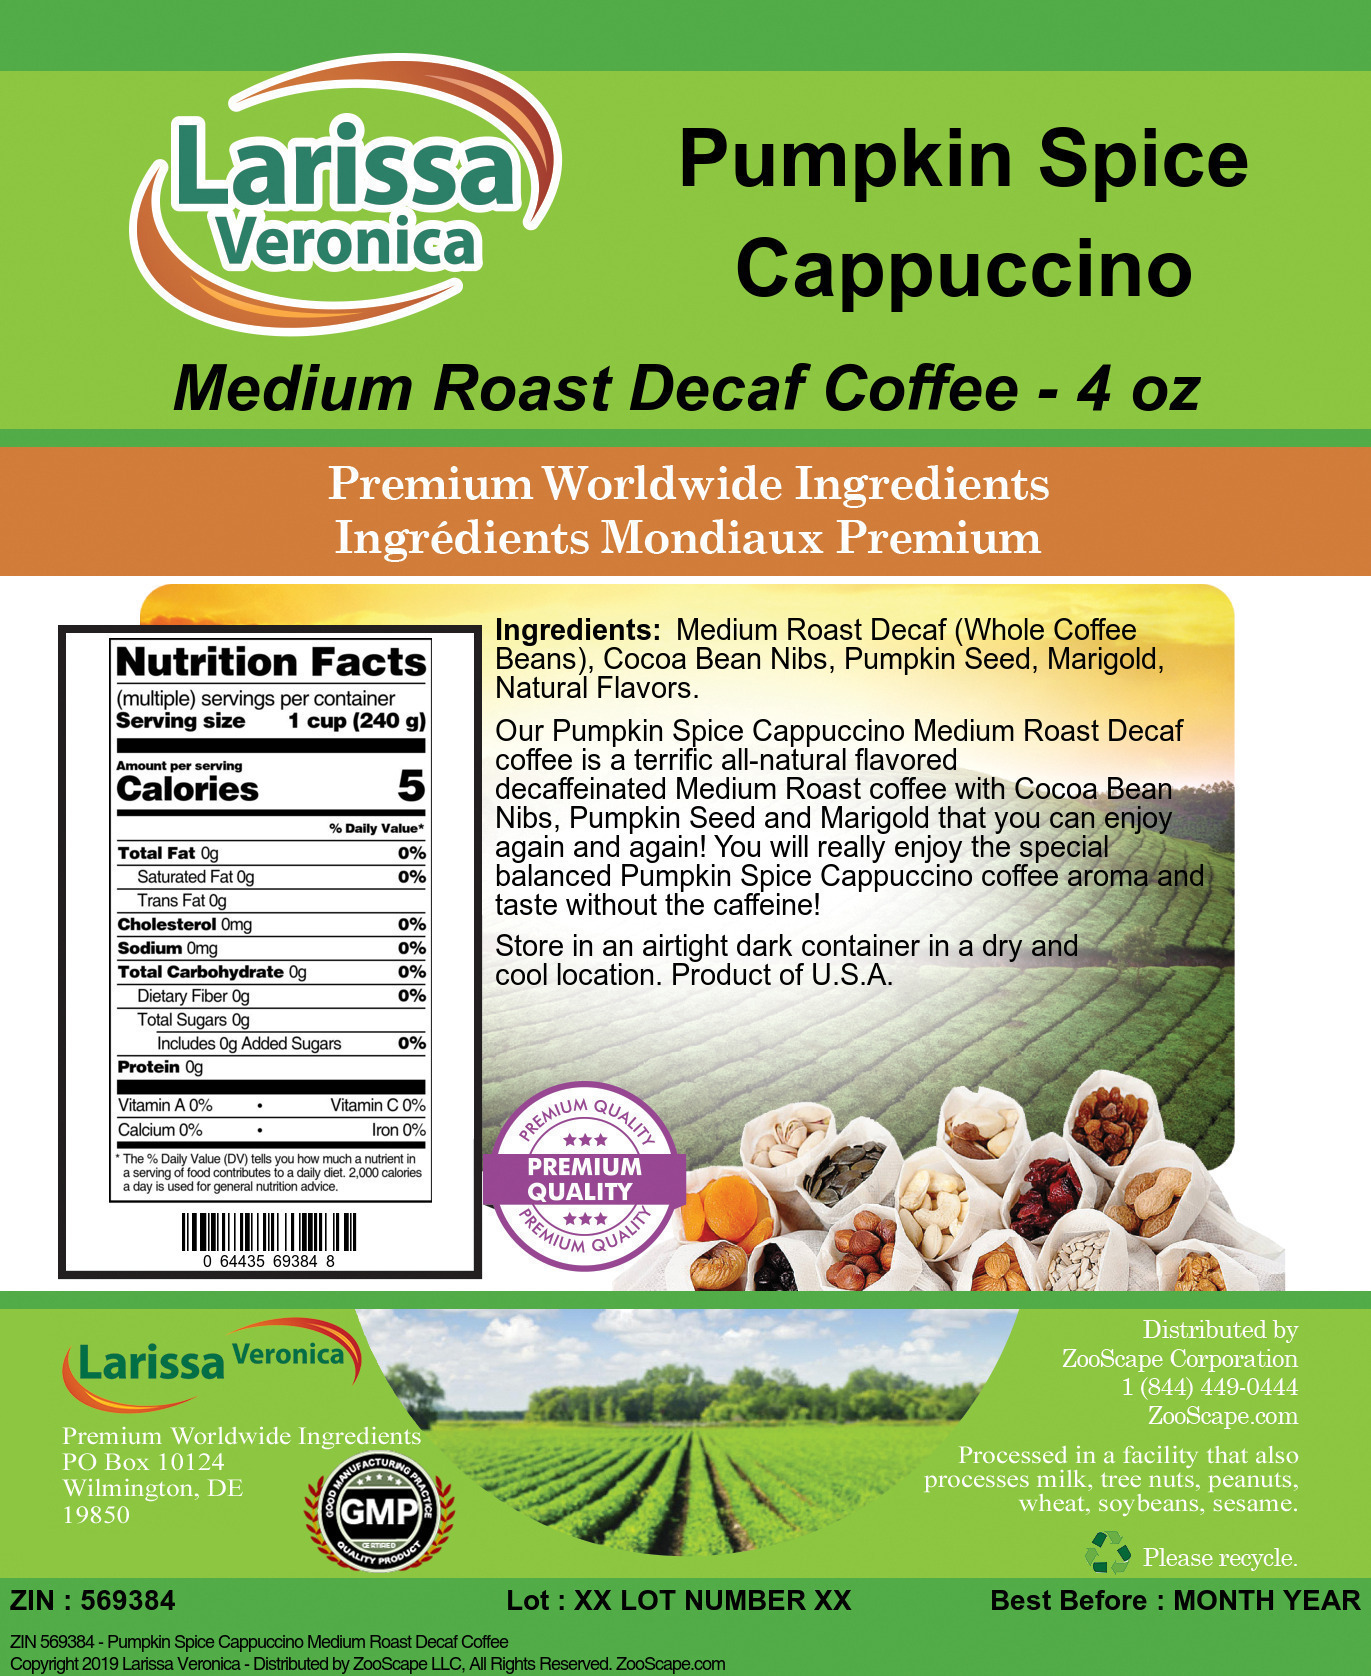 Pumpkin Spice Cappuccino Medium Roast Decaf Coffee - Label